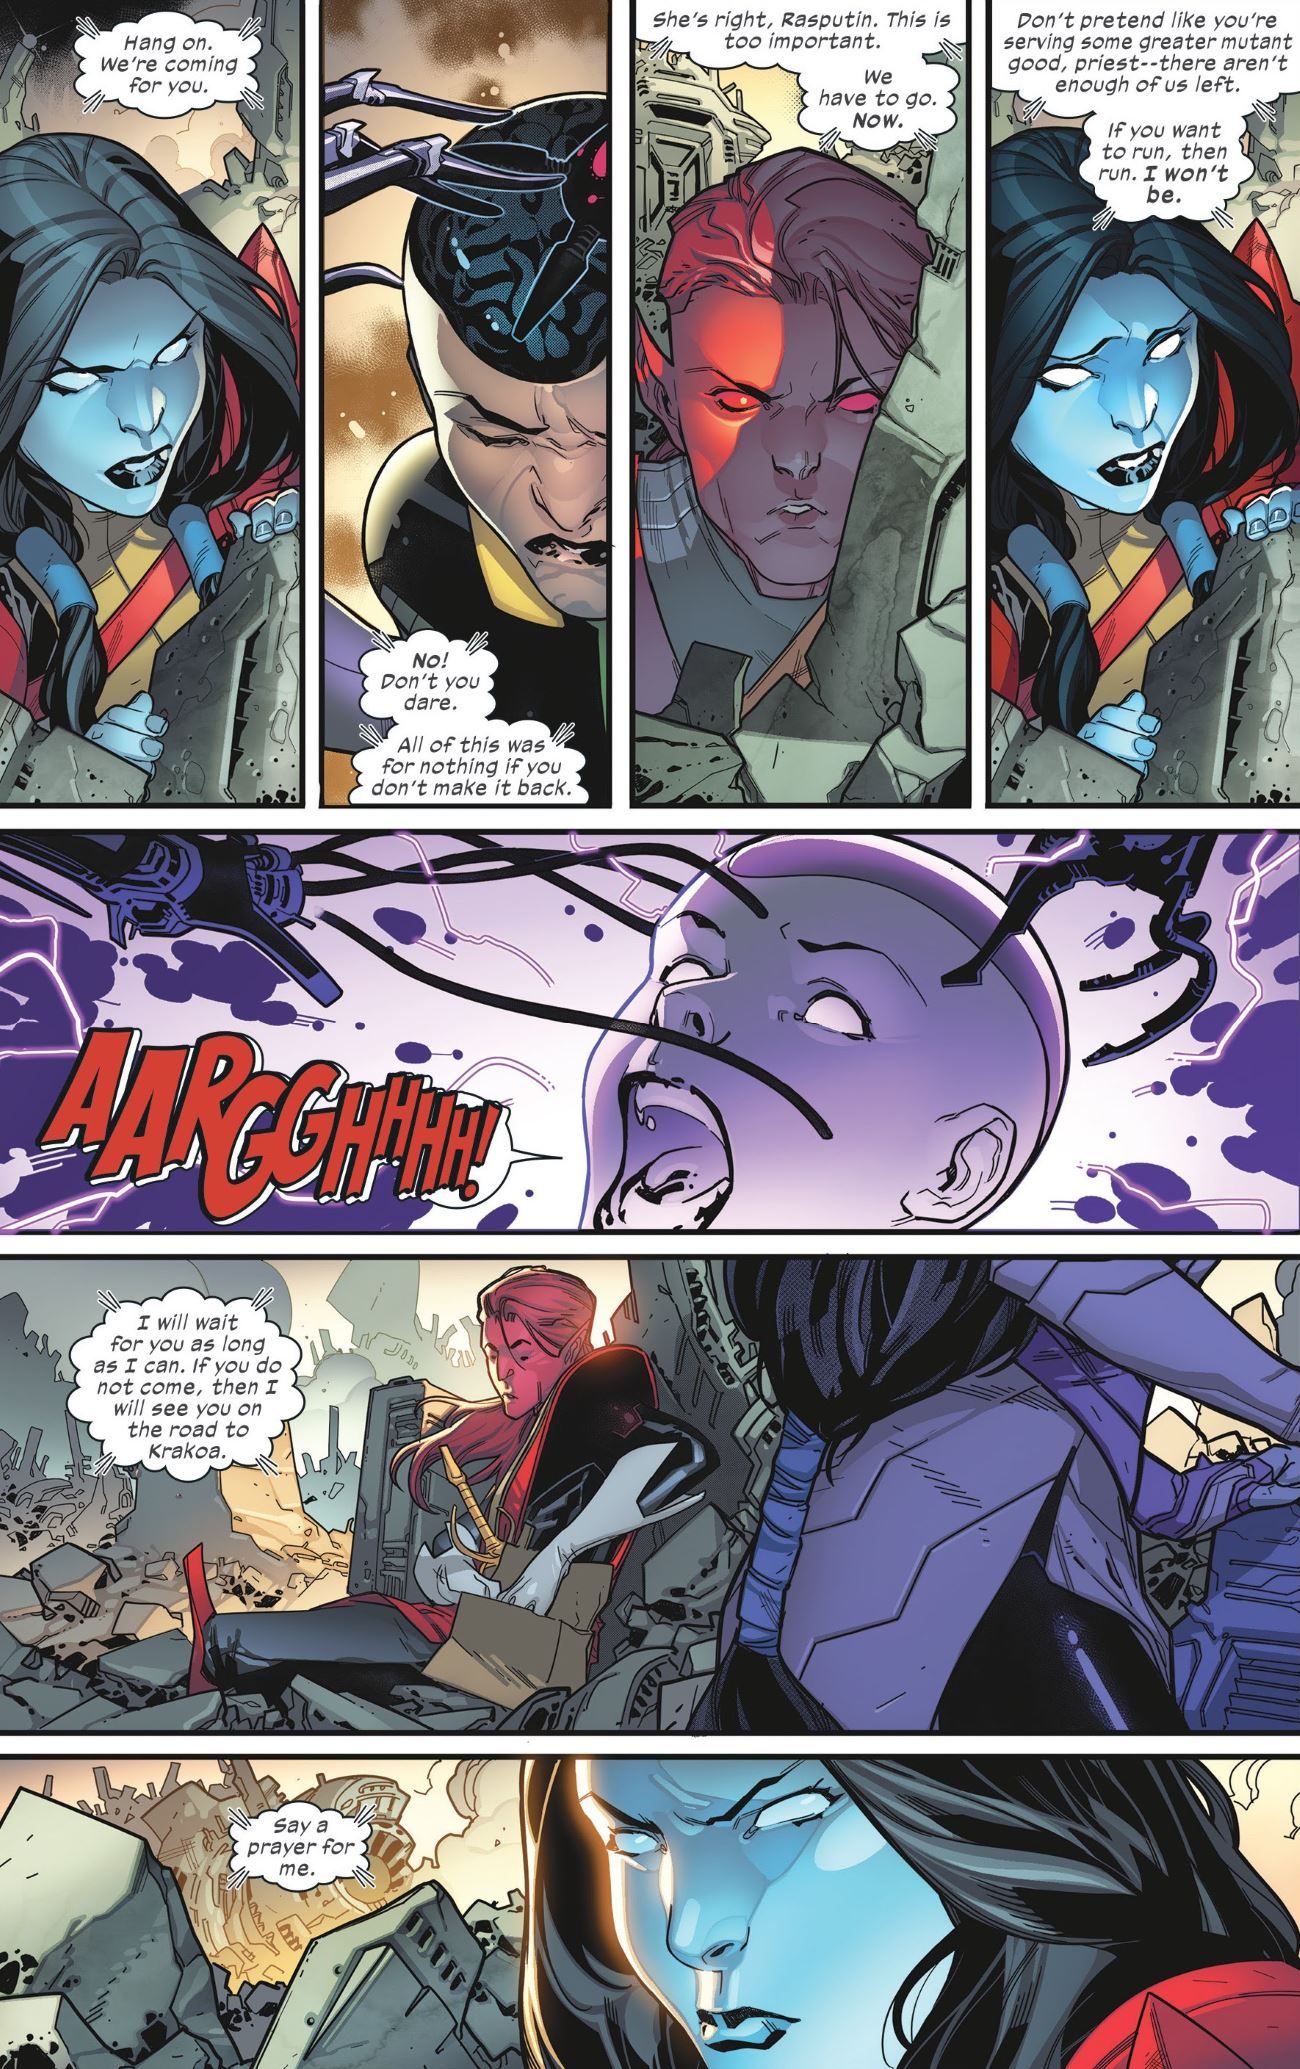 X-Men Comic Powers of X Preview